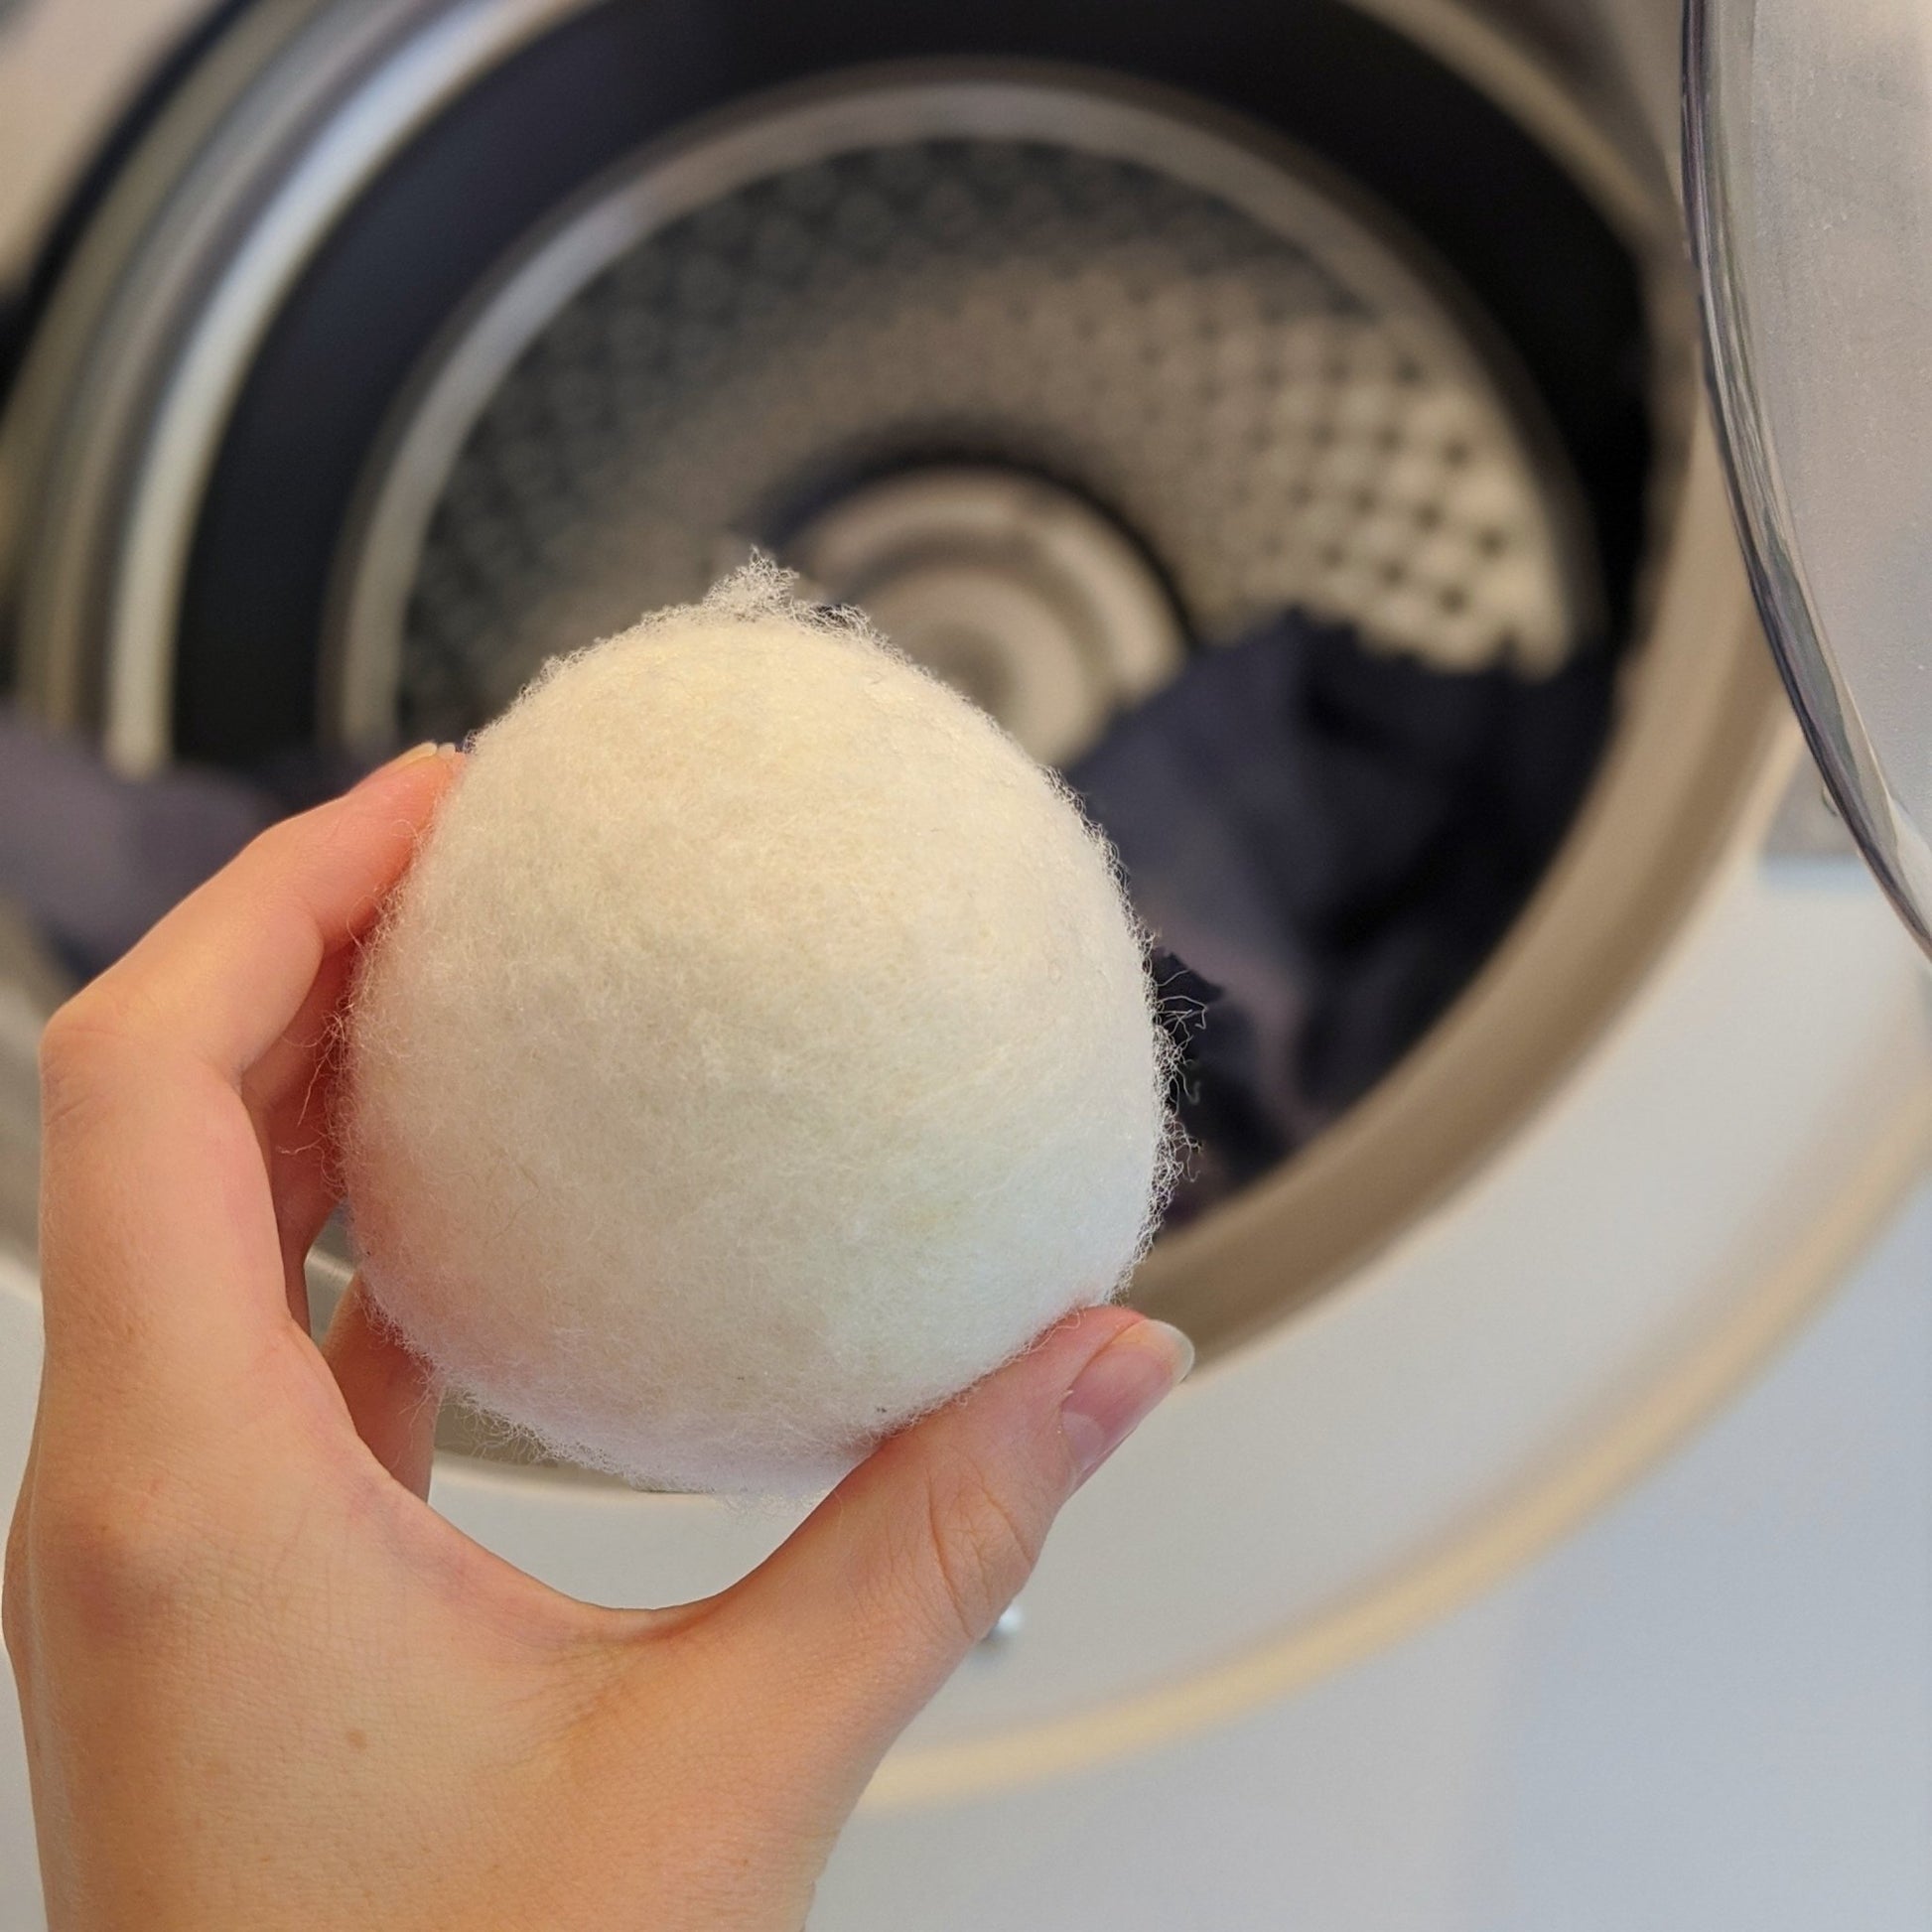 Australian Wool Dryer Balls - Little Bumble Reusable Food Wraps